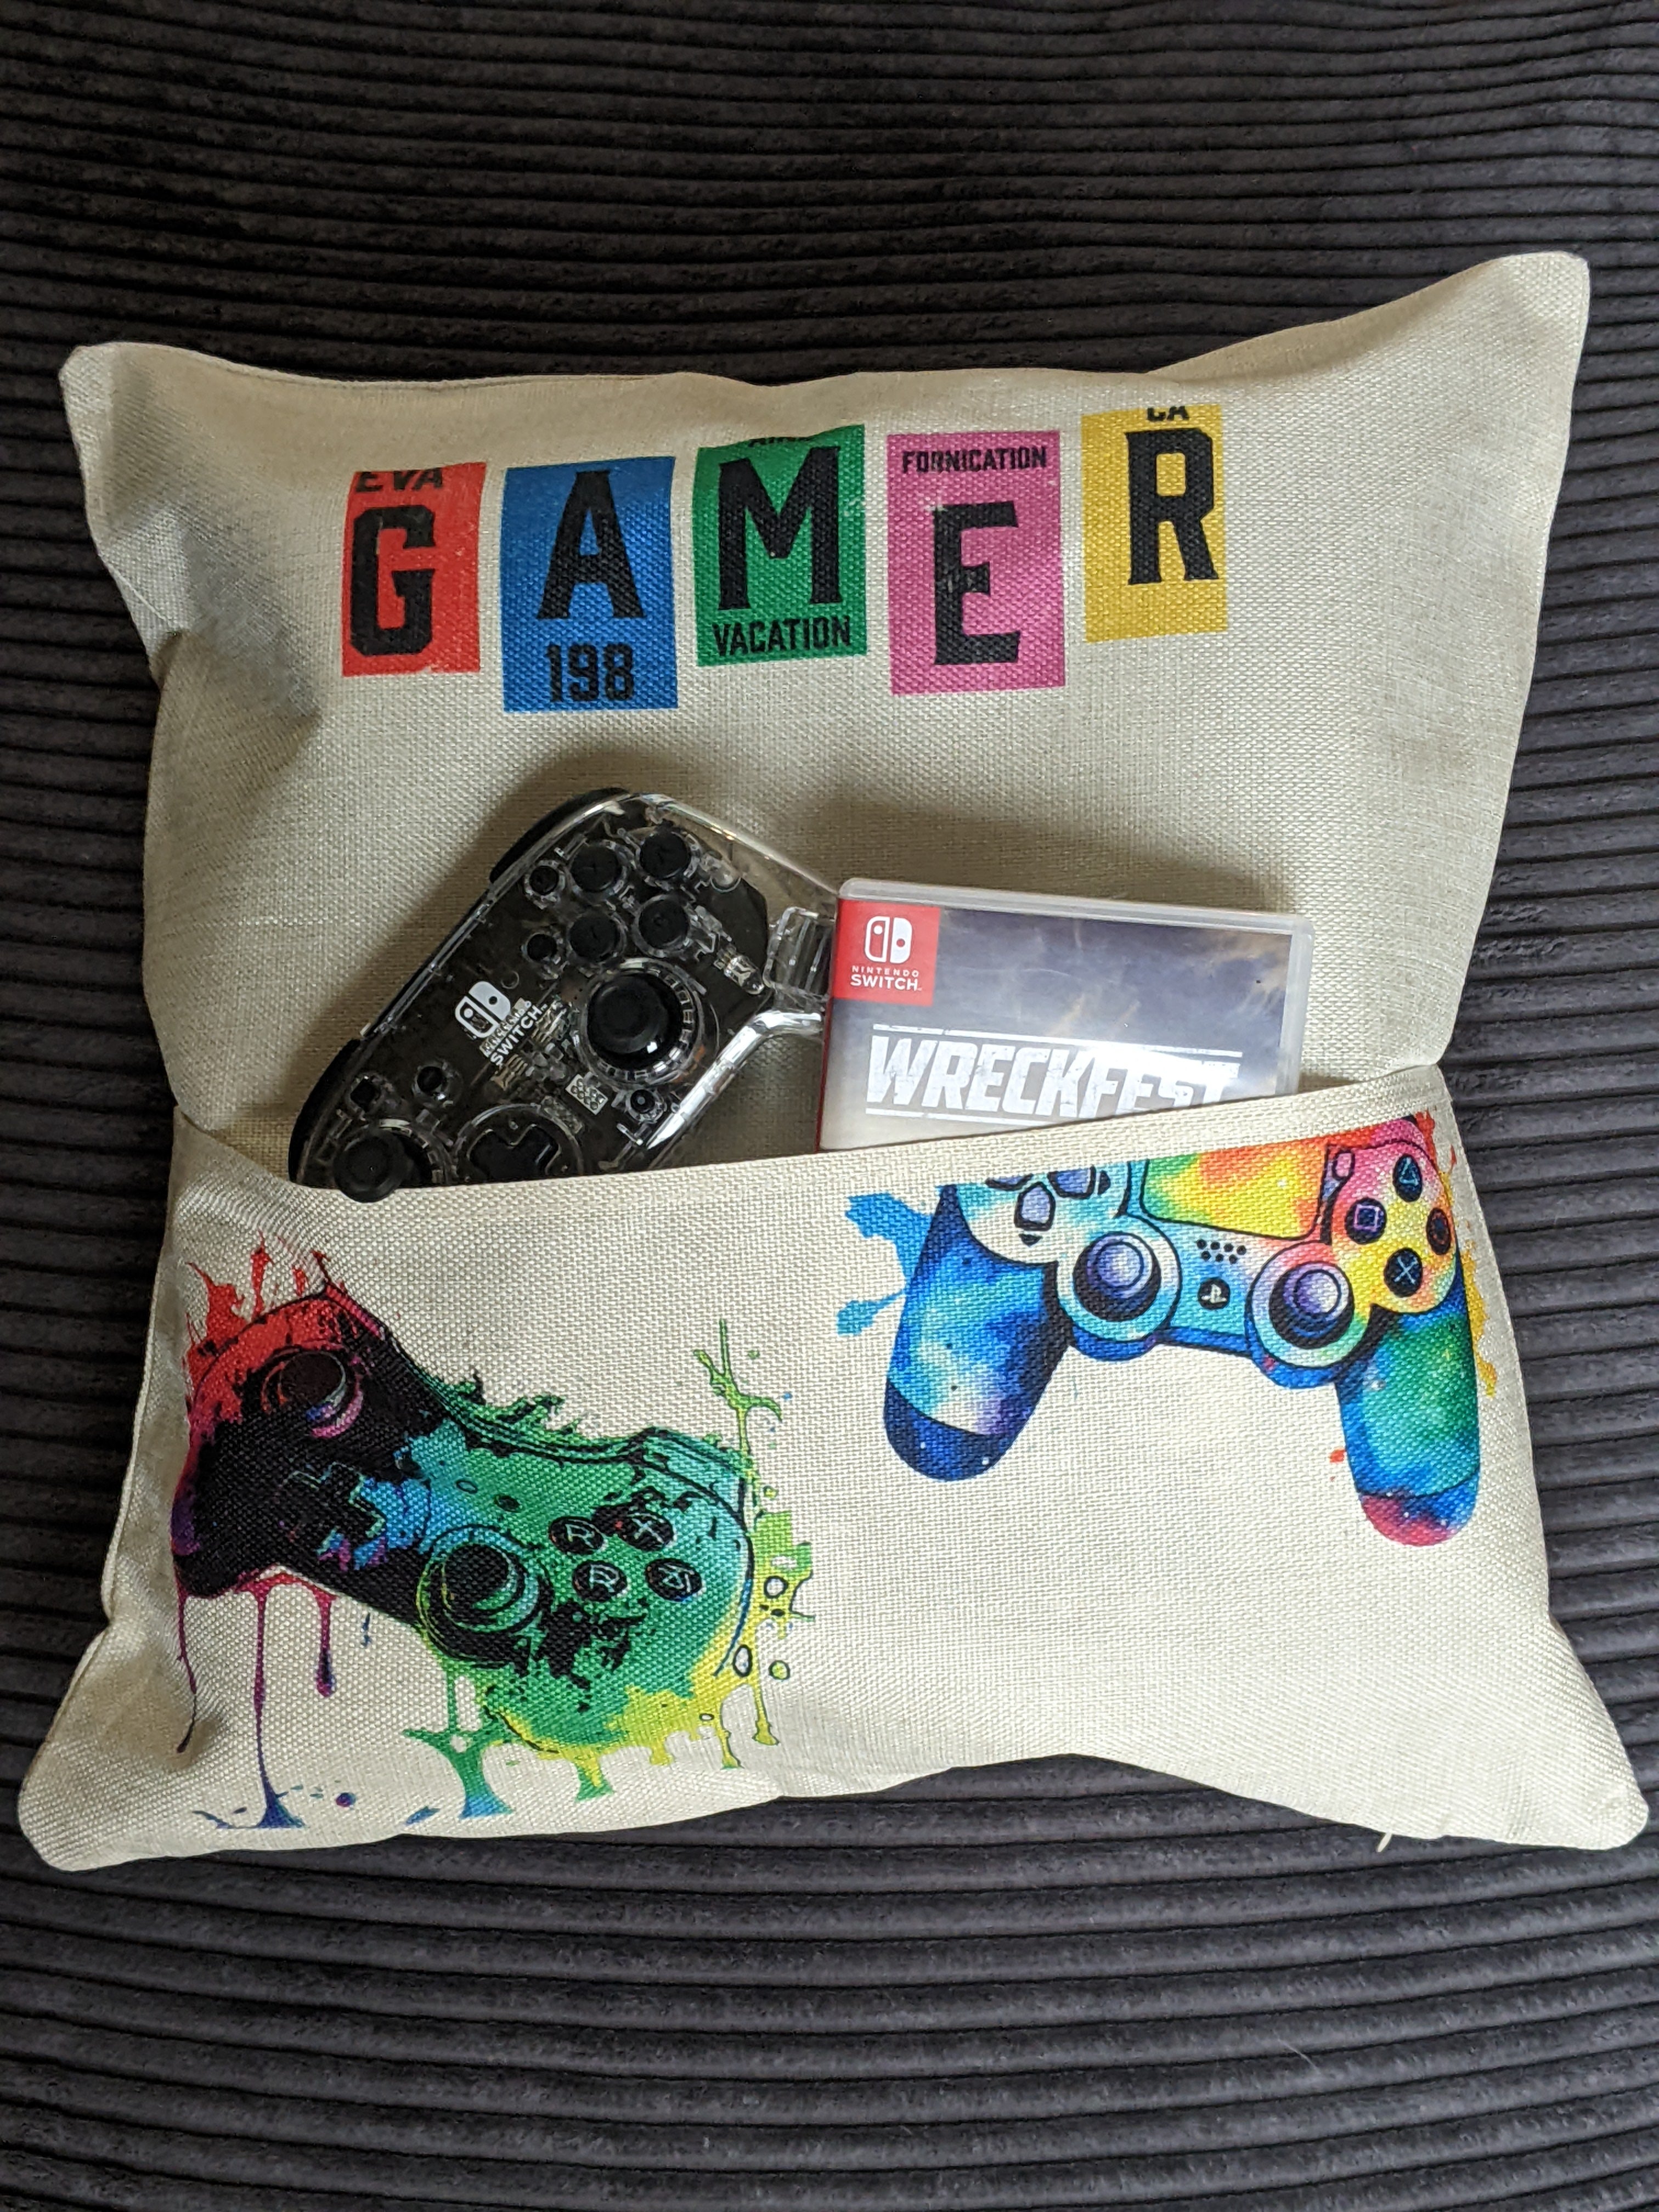 Gaming Pillow